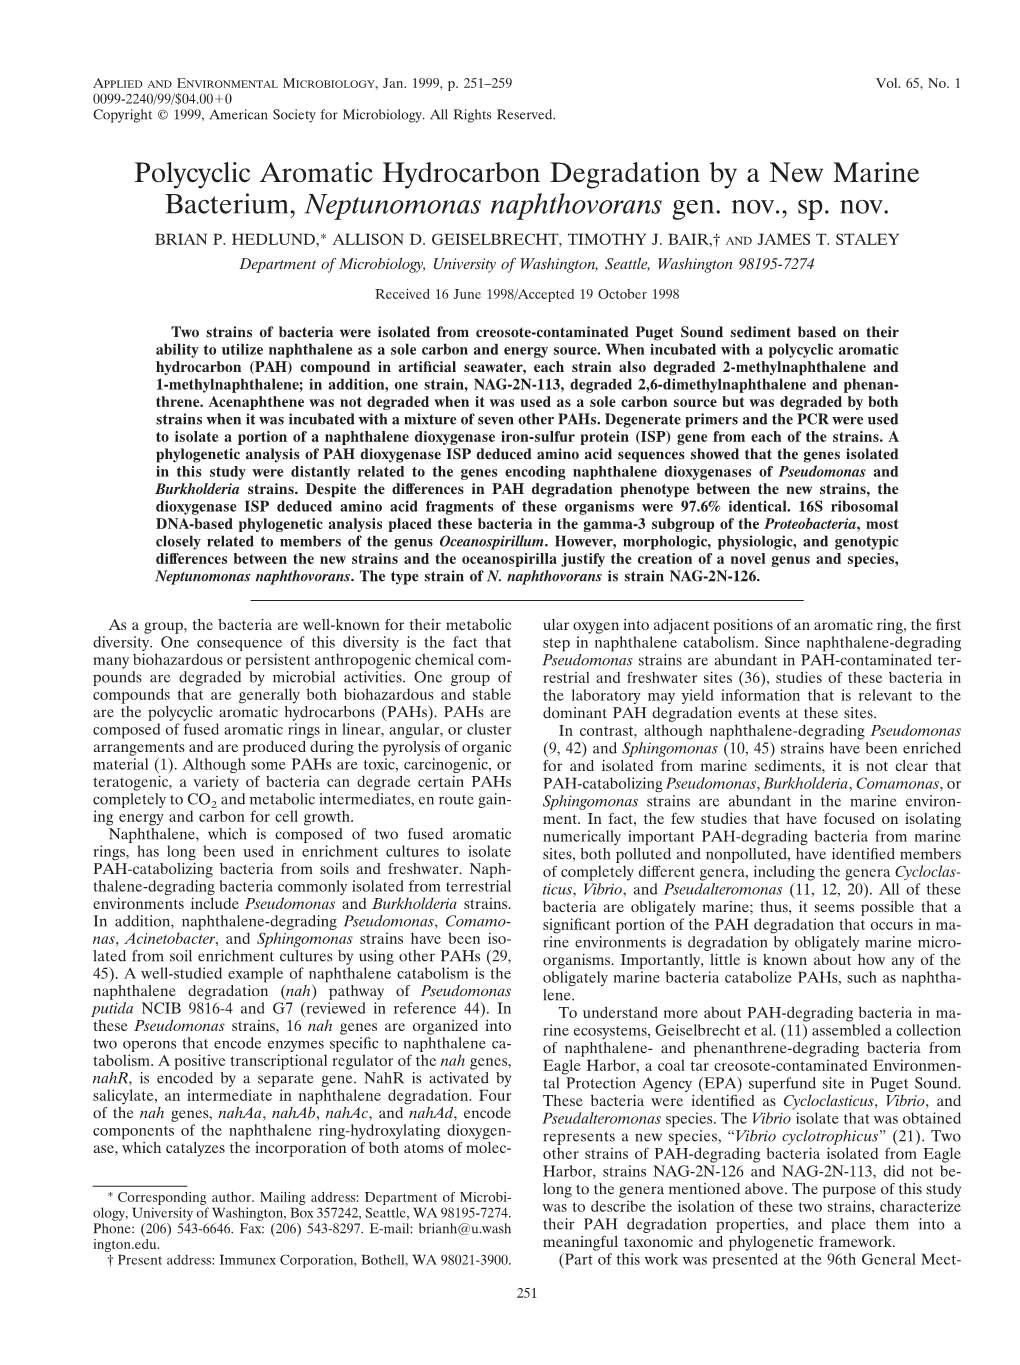 Polycyclic Aromatic Hydrocarbon Degradation by a New Marine Bacterium, Neptunomonas Naphthovorans Gen. Nov., Sp. Nov